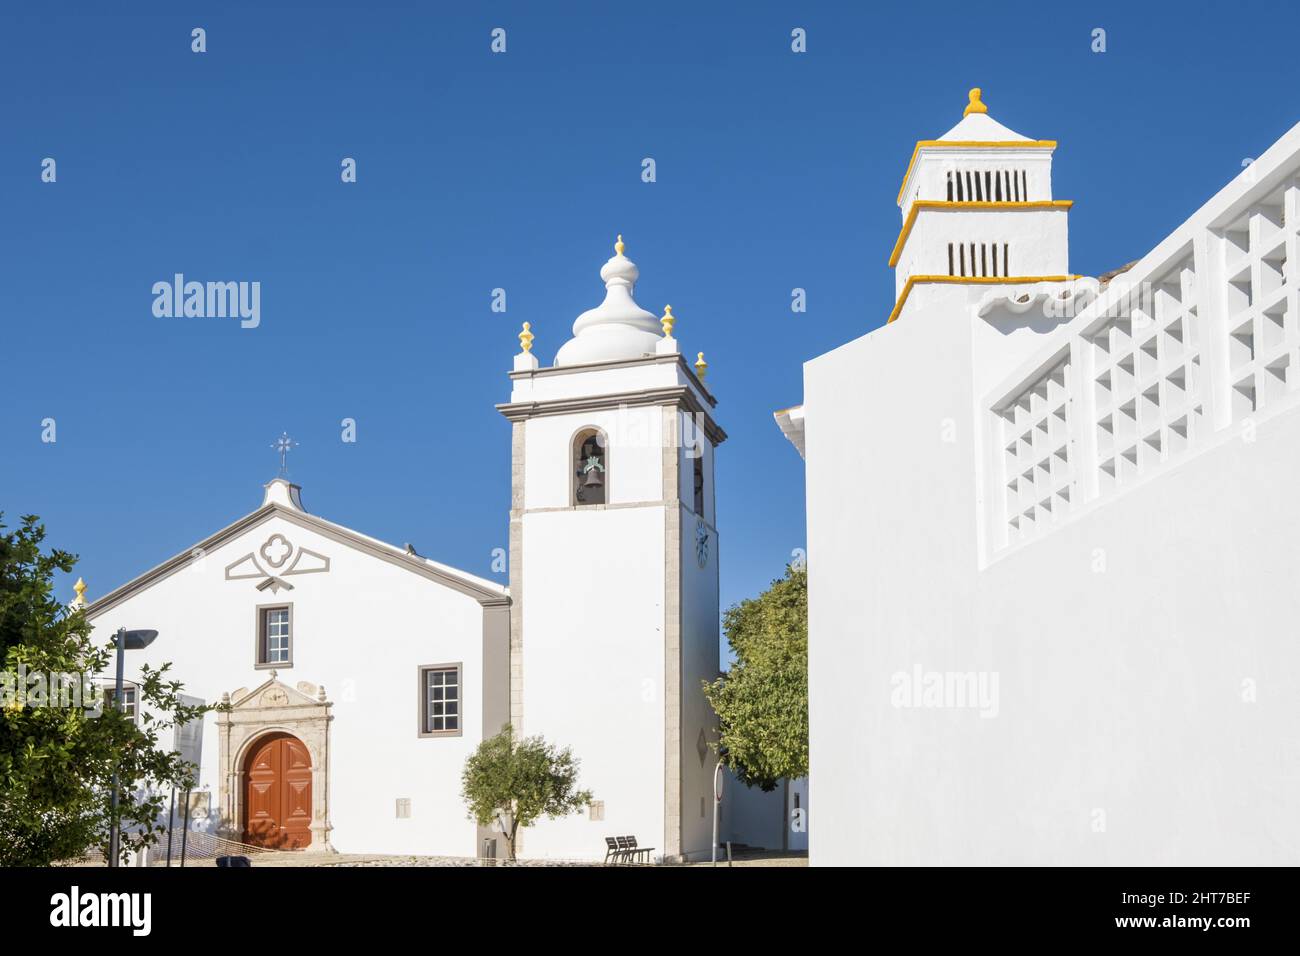 clocher de l'église portugaise repère Igreja de Sao Martinho de Estoi connu sous le nom de Matriz de Estoi, Faro, Algarve, Portugal Banque D'Images